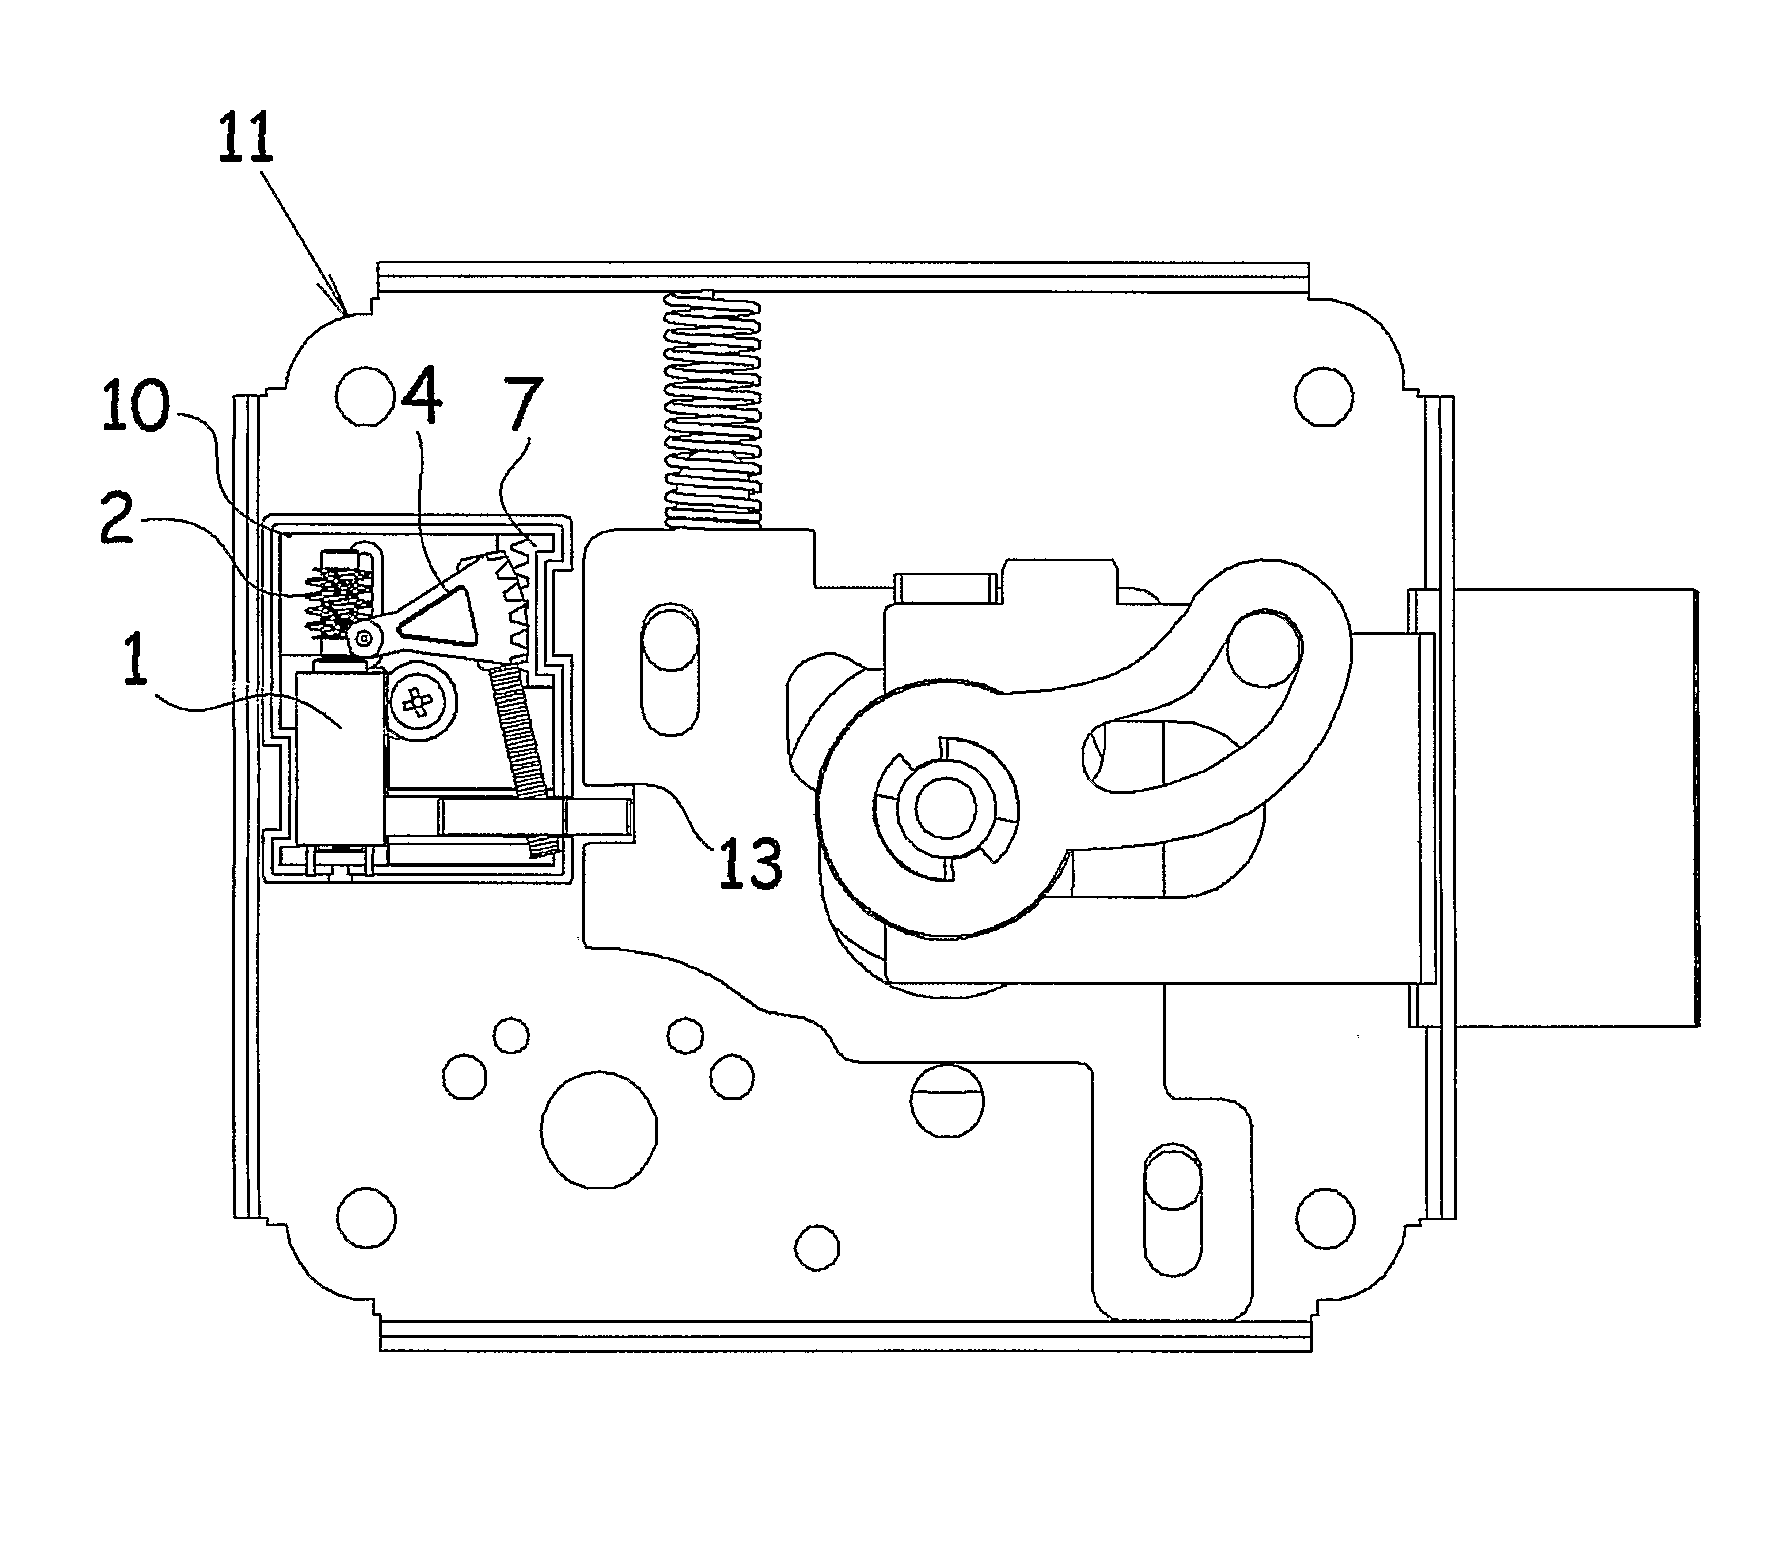 Micro motor locking system